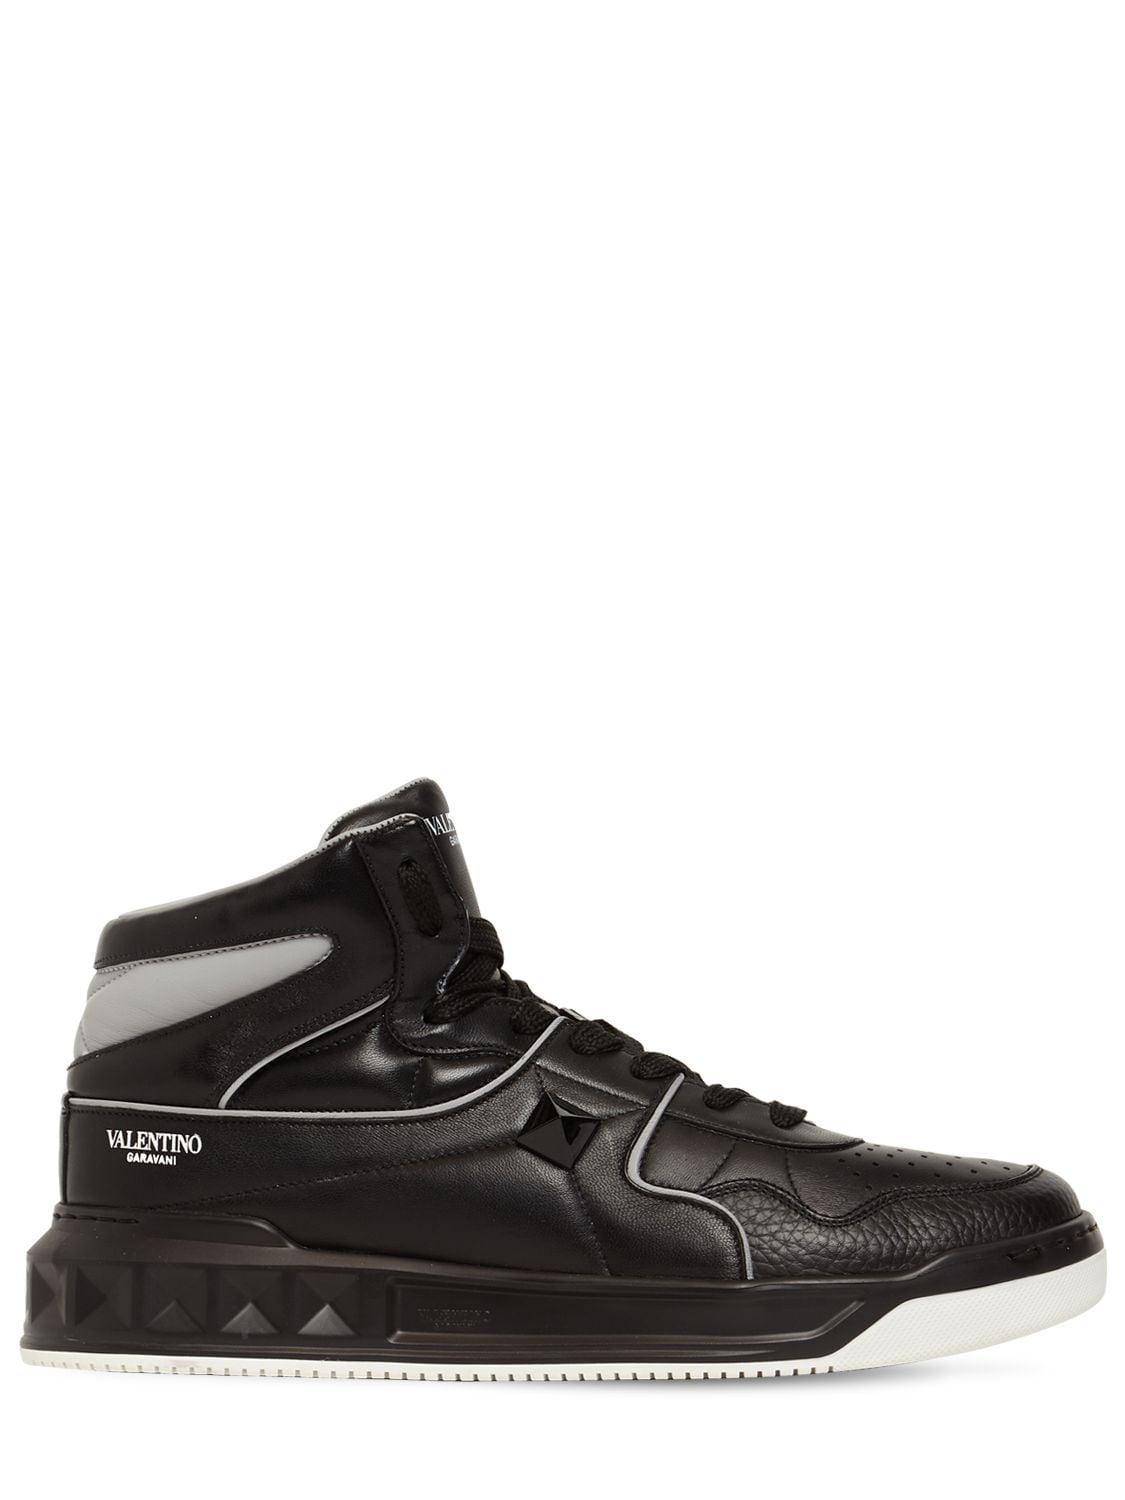 VALENTINO GARAVANI 铆钉装饰高帮皮革运动鞋,74I3GT001-MDBB0